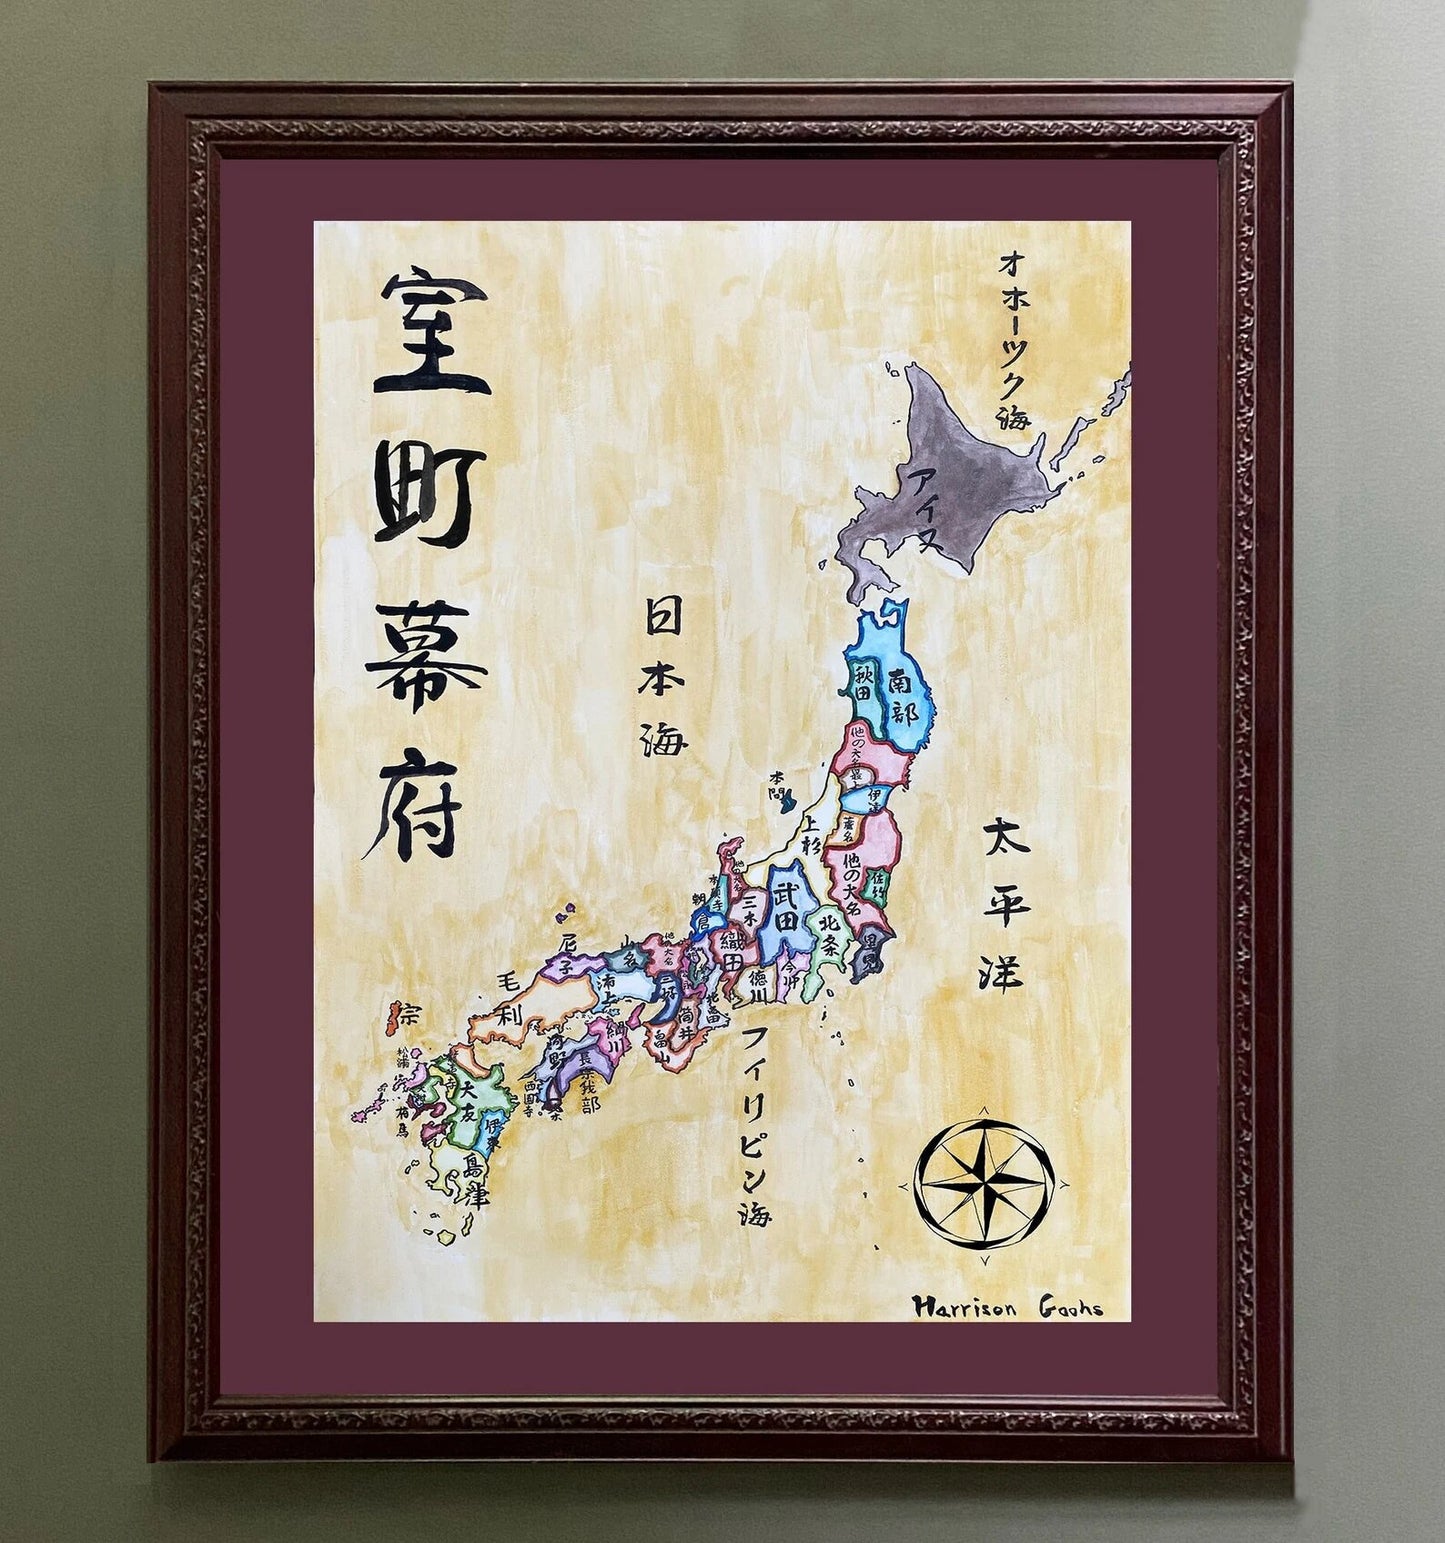 Map of the Ashikaga Shogunate - Japanese Daimyos - Muromachi